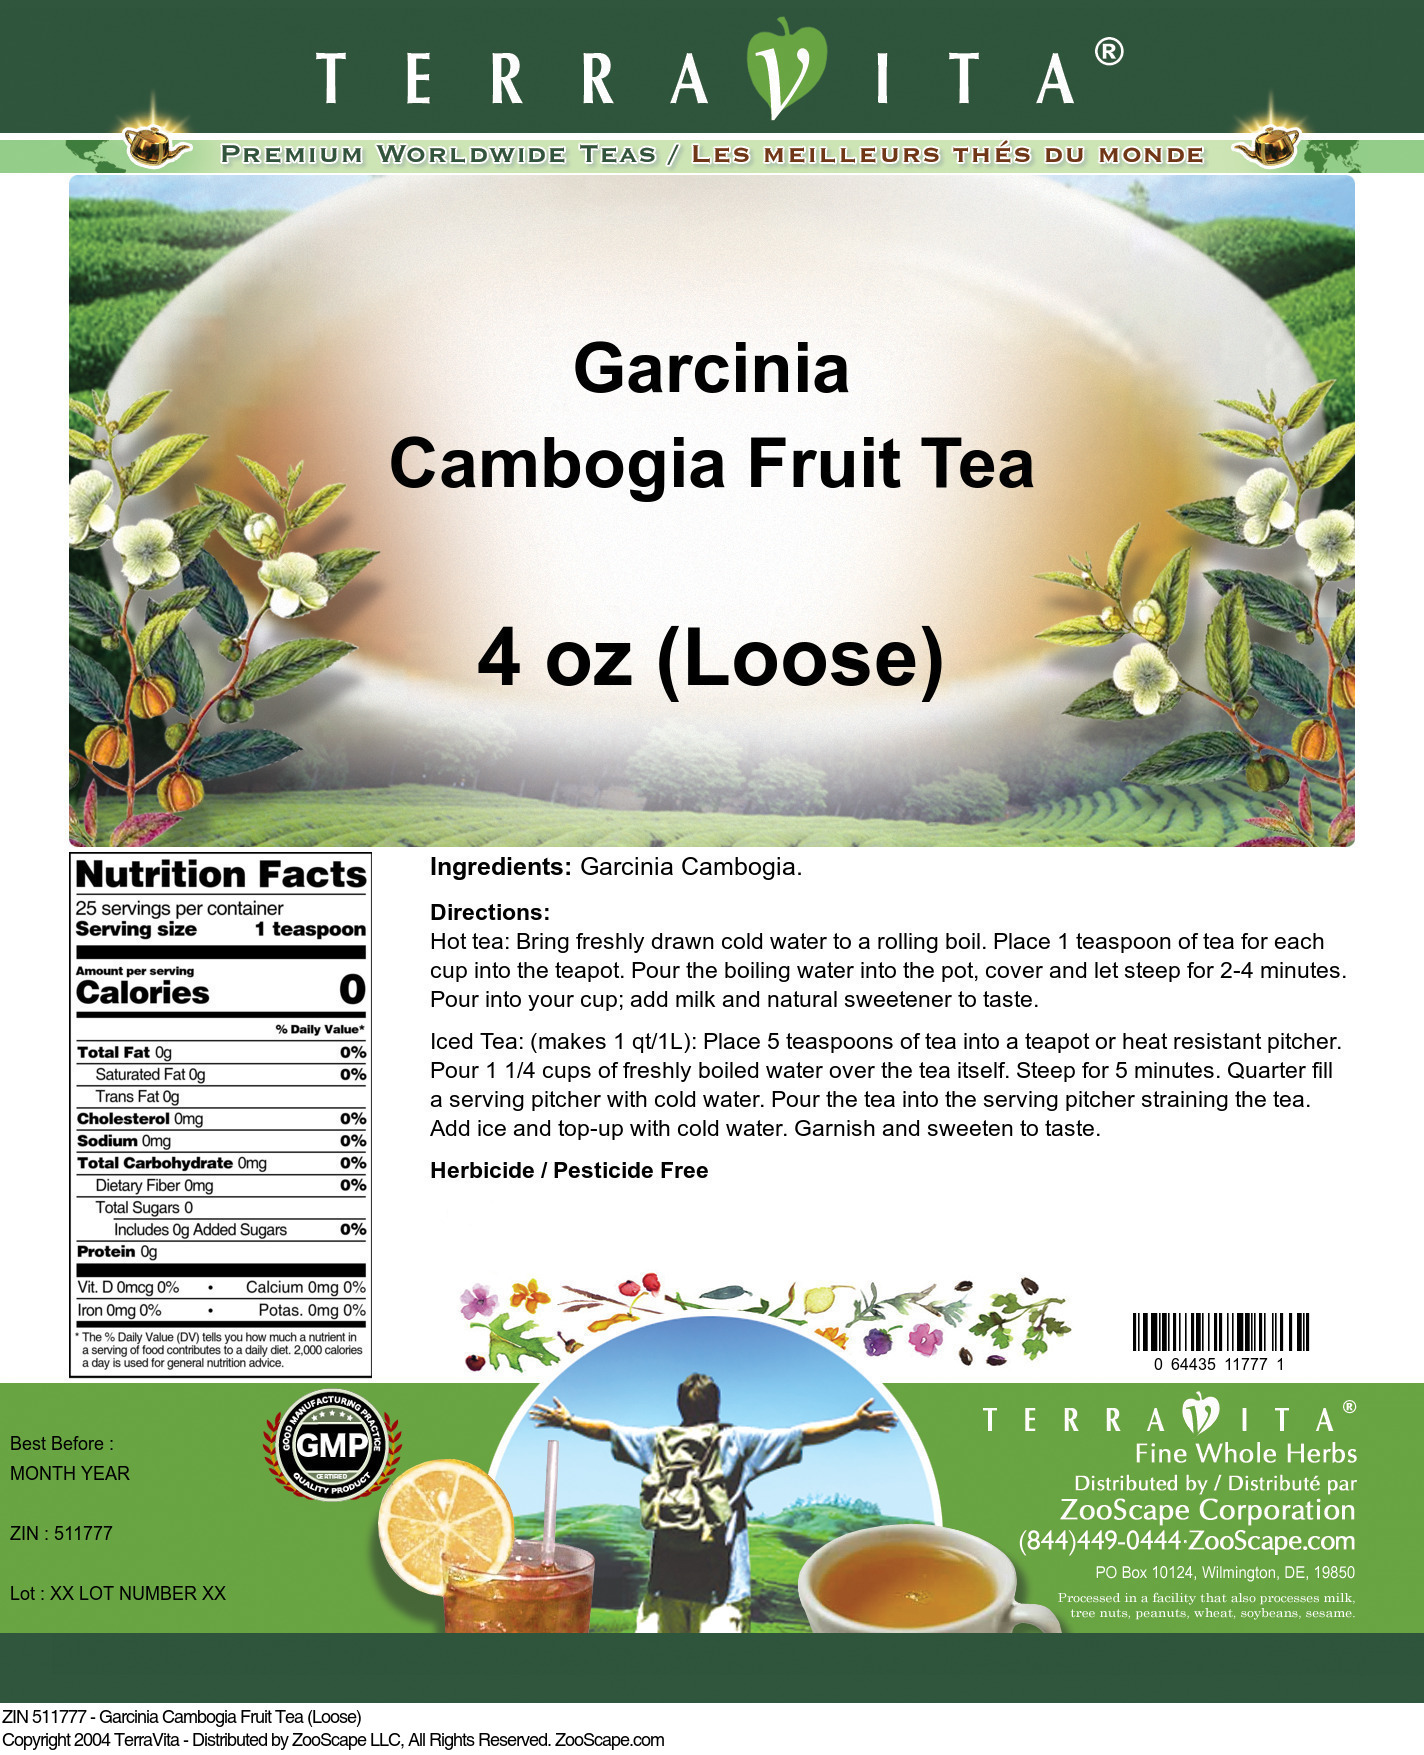 Garcinia Cambogia Fruit Tea (Loose) - Label